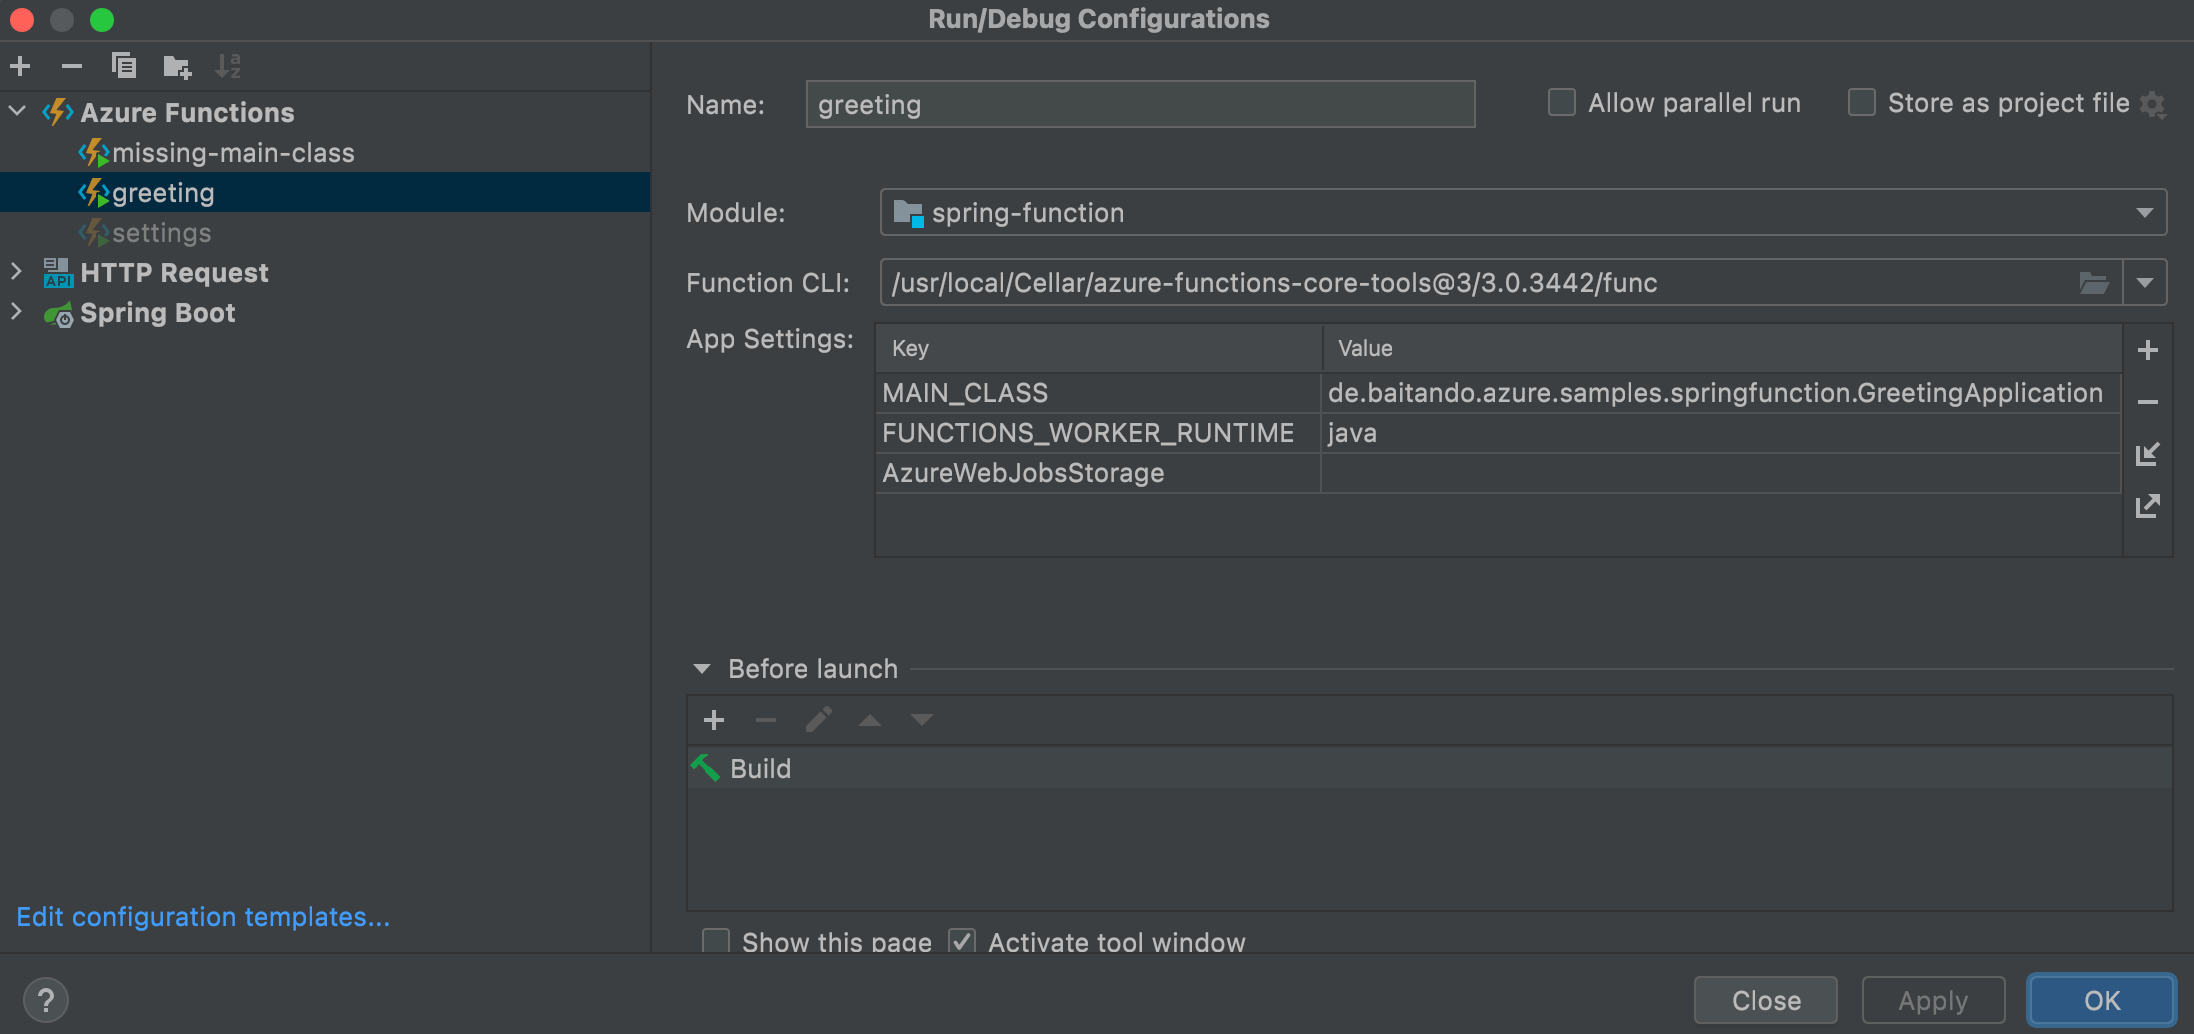 Run configuration for running the Azure Function from Intellij Idea